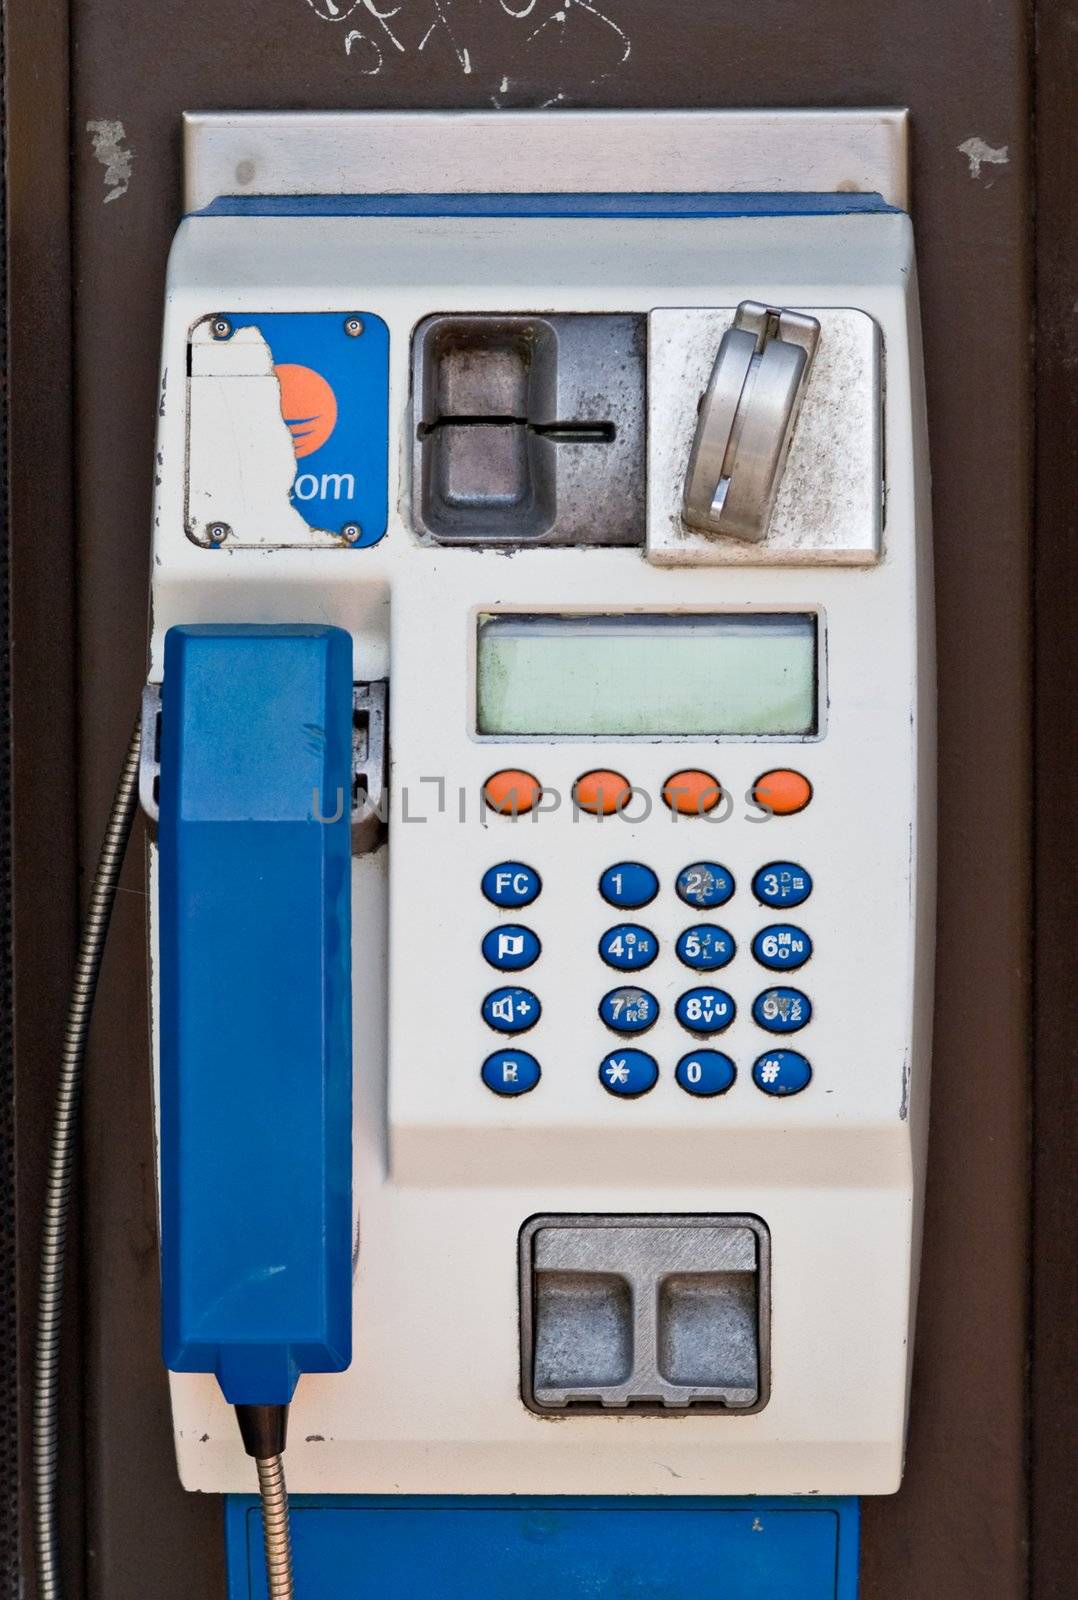 European Payphone by sbonk